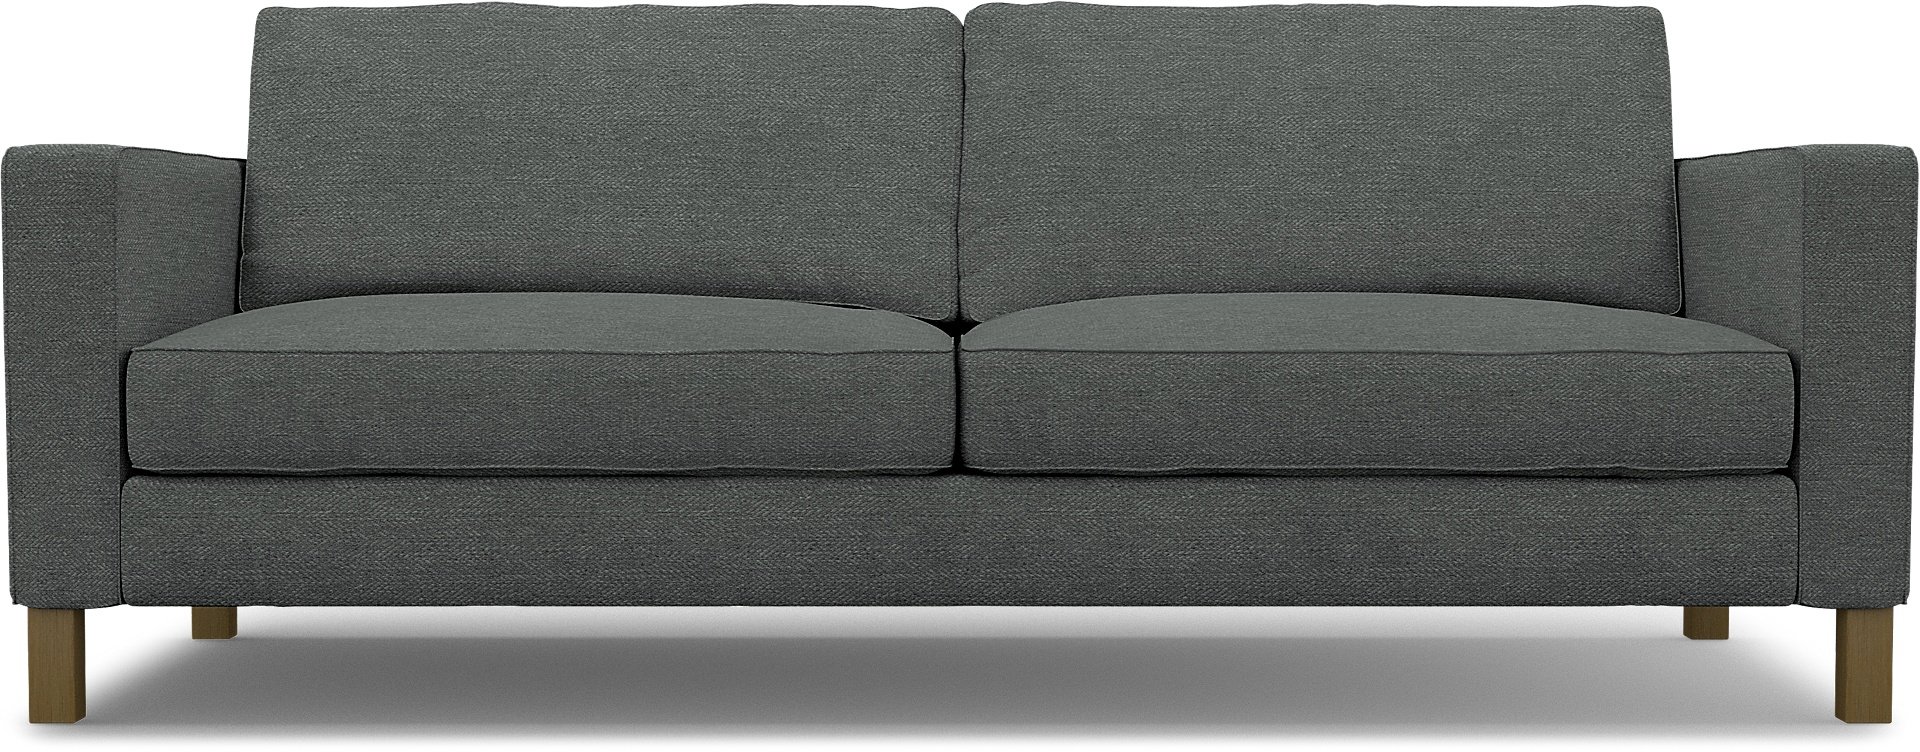 IKEA - Karlstad 3 Seater Sofa Cover, Laurel, Boucle & Texture - Bemz